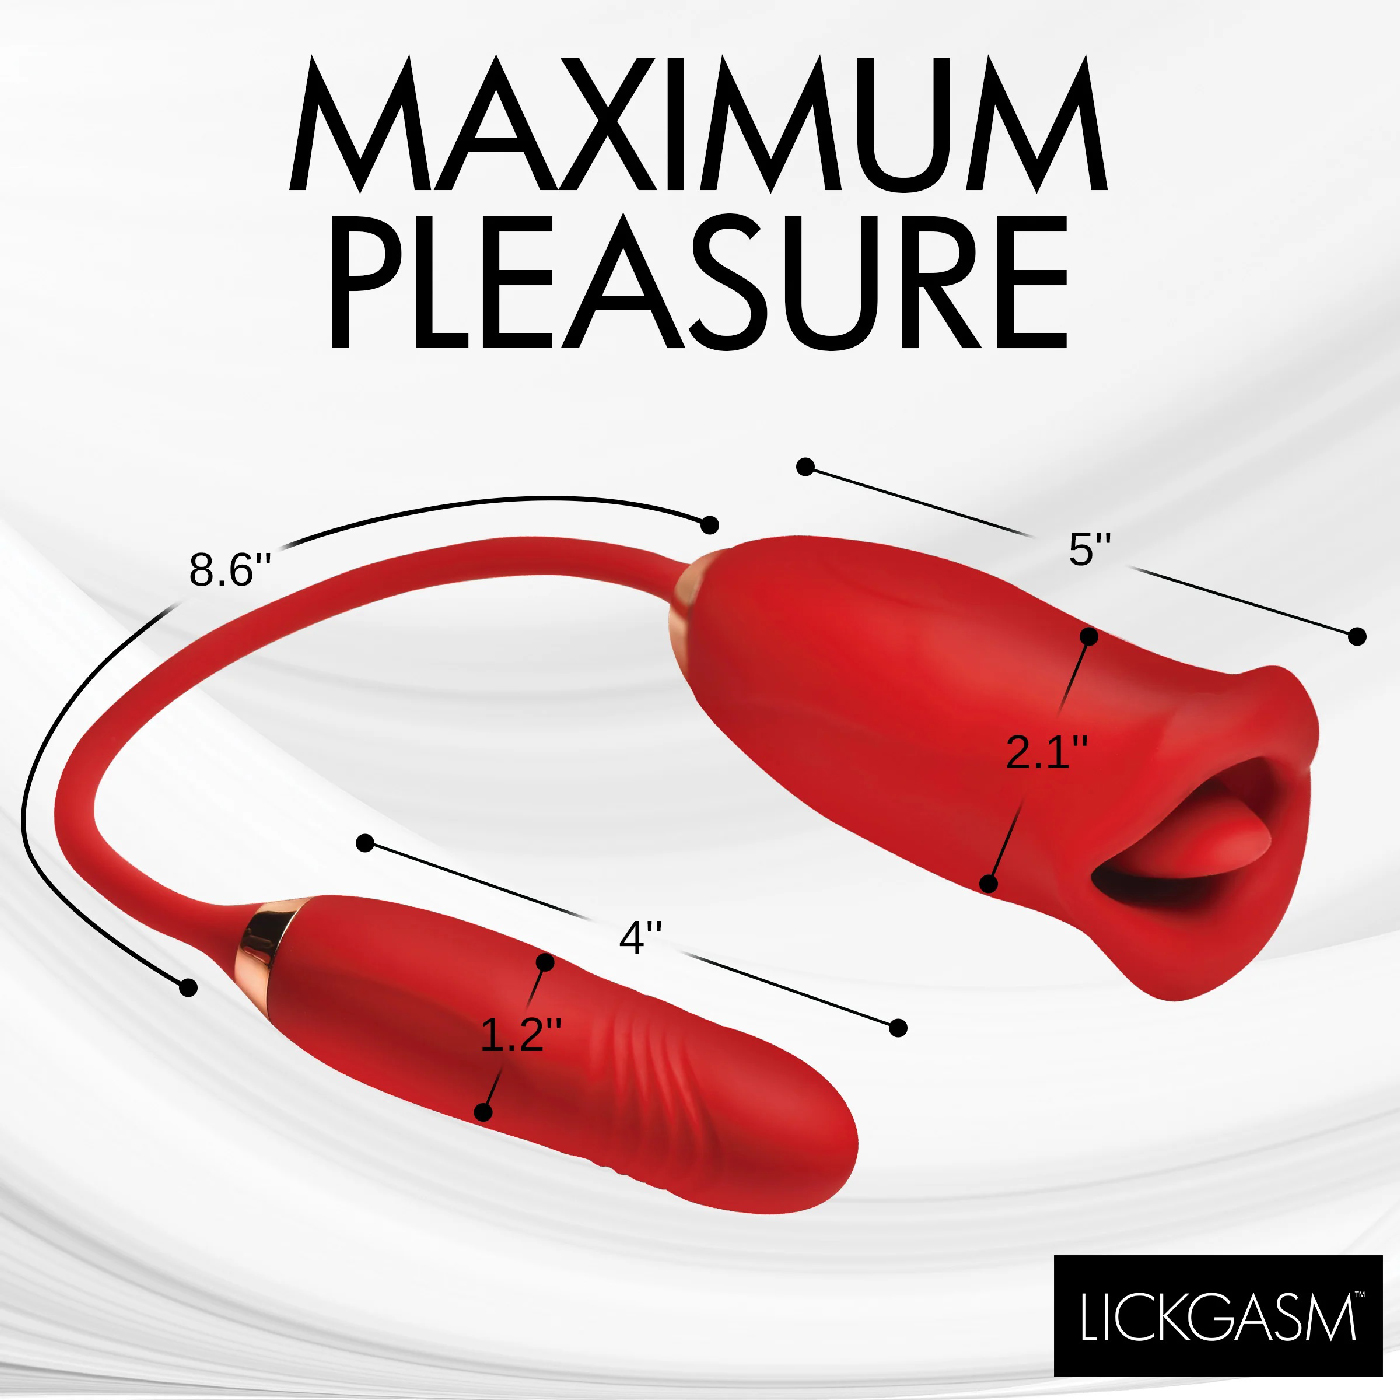 magic kiss kissing clitoral stimulator with  thrusting vibrator red 